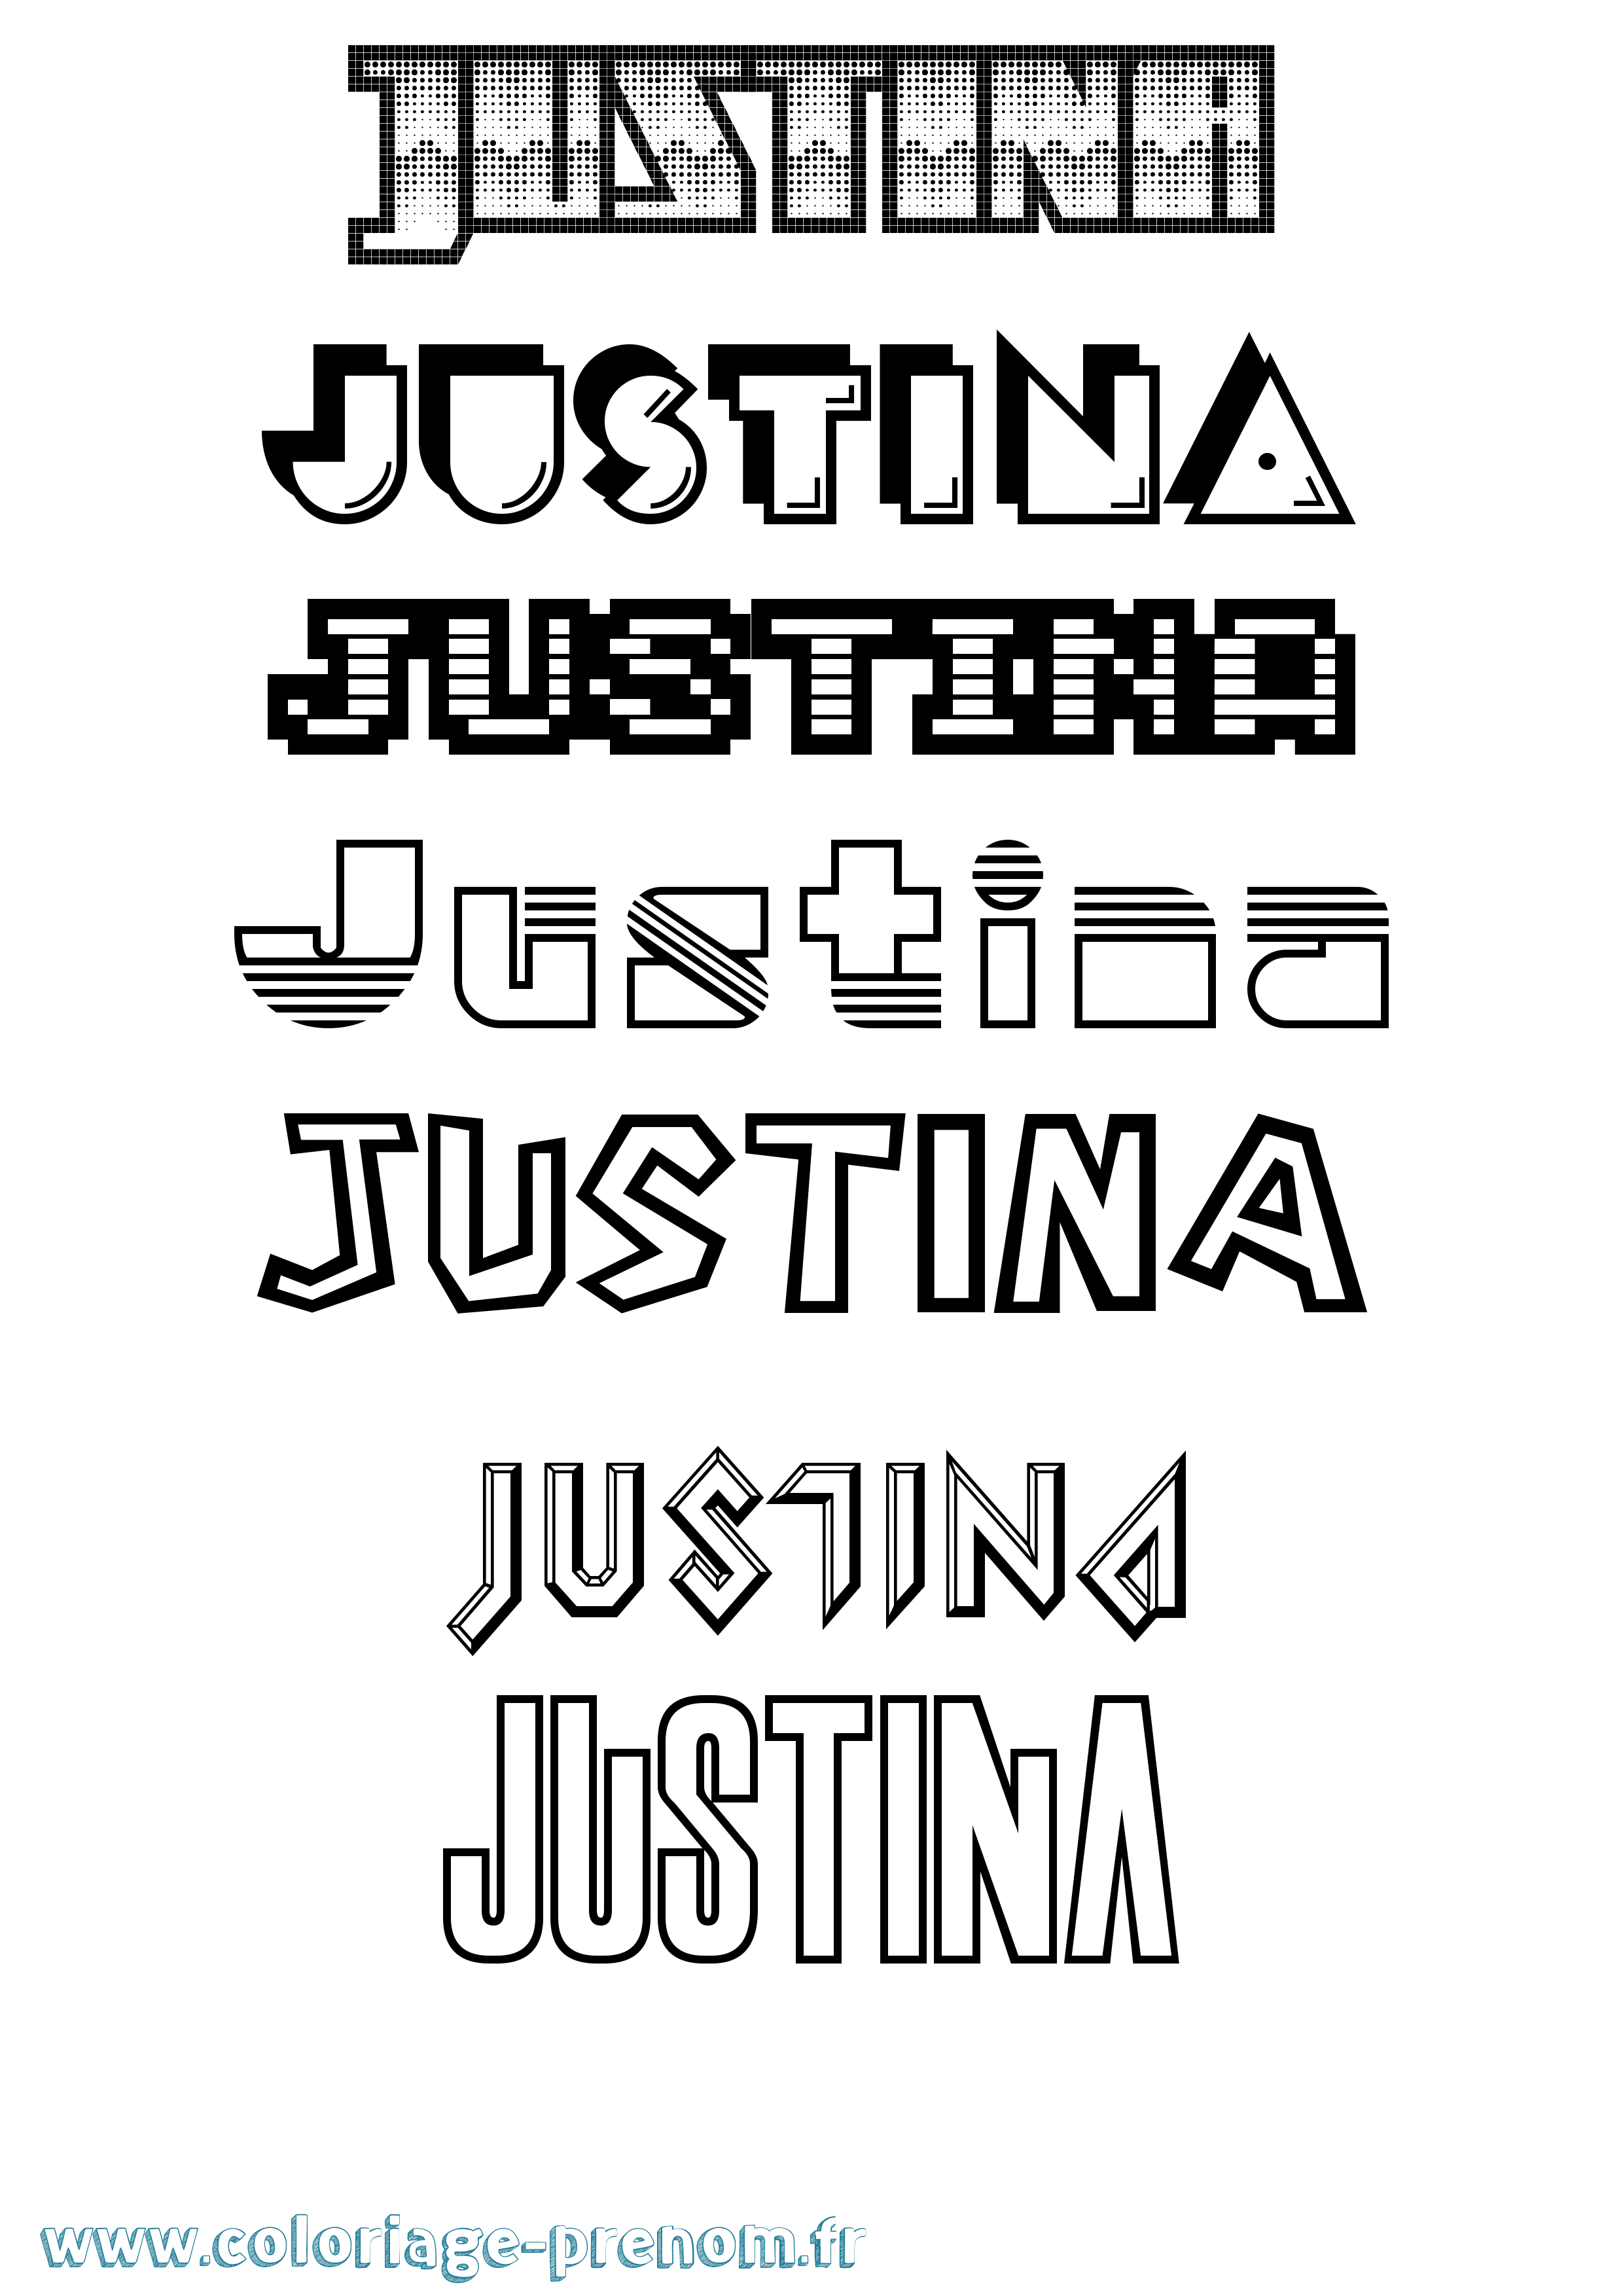 Coloriage prénom Justina Jeux Vidéos